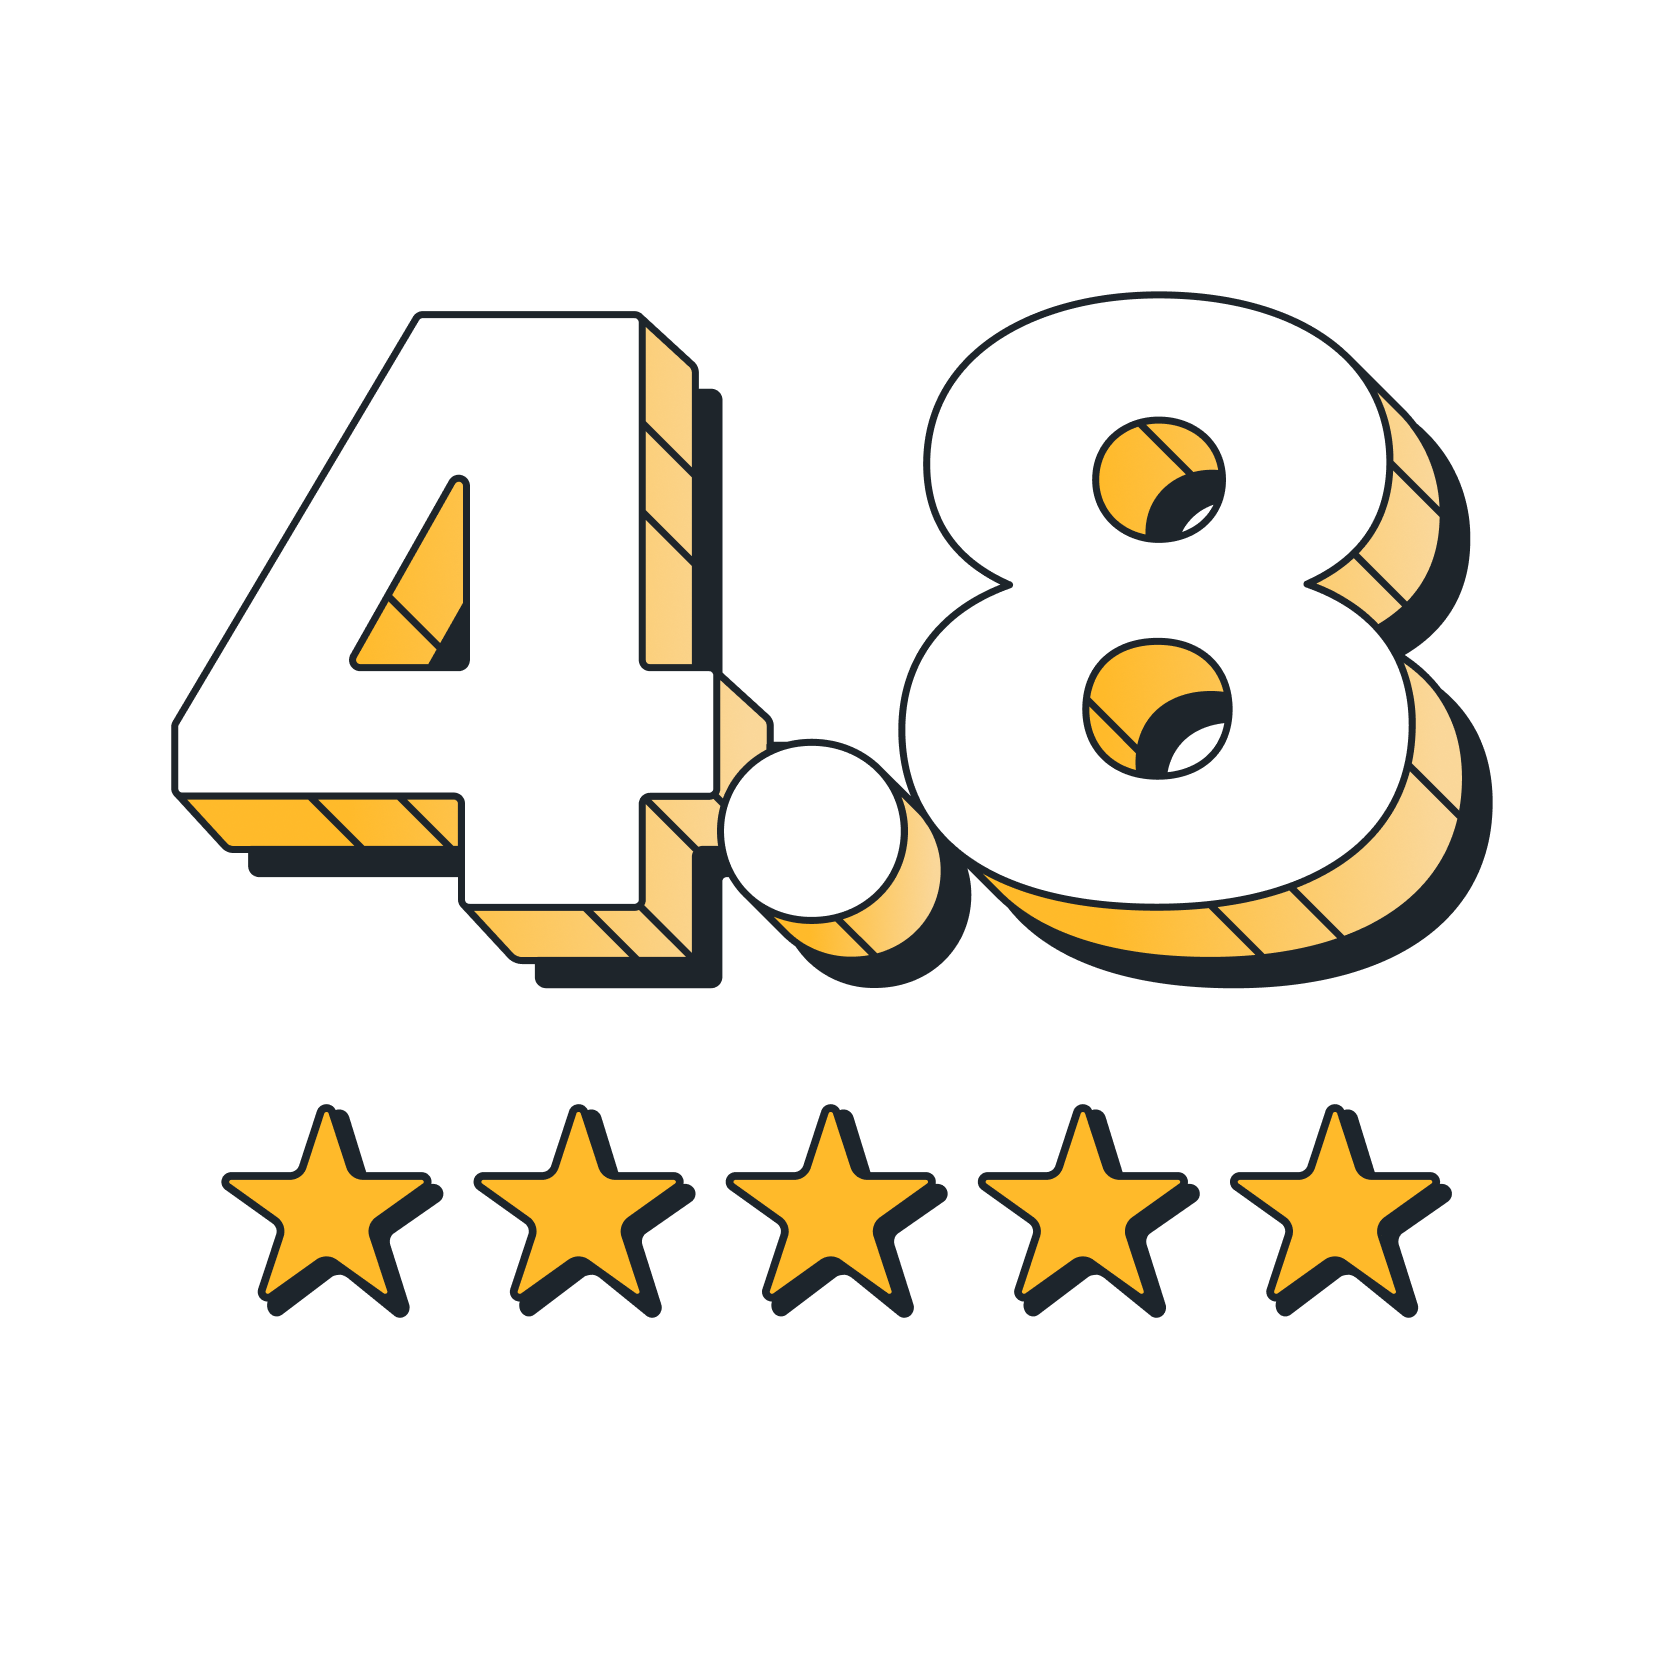 4.8 stars on the App Store